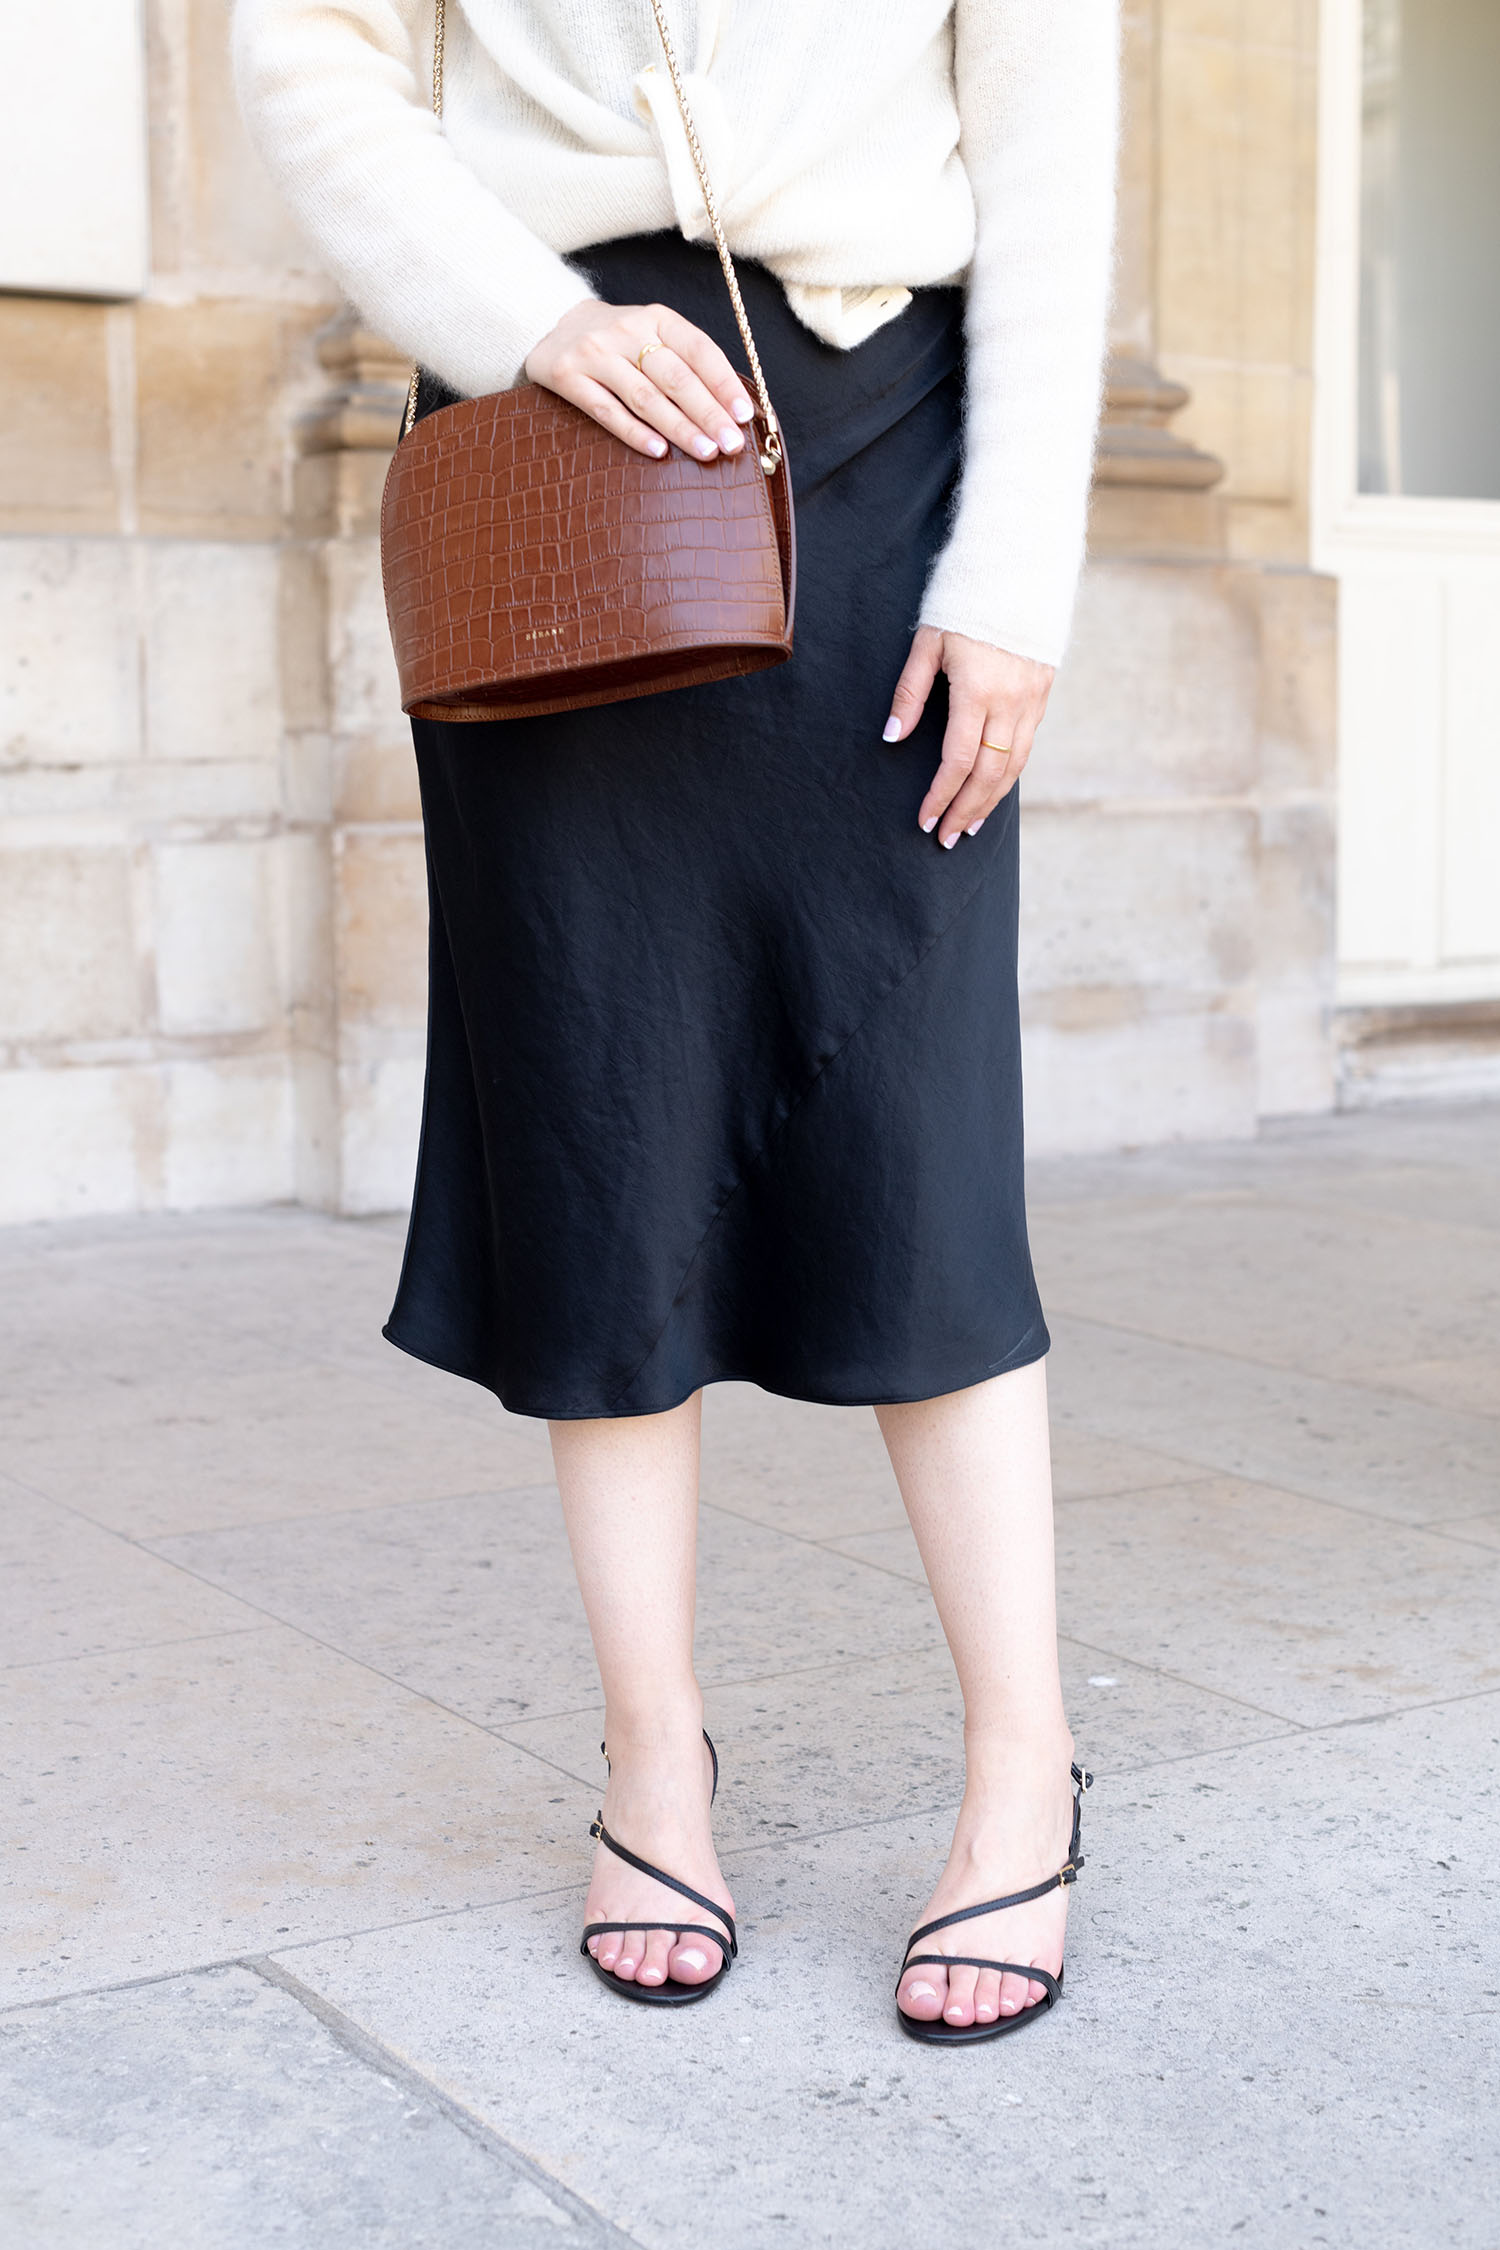 Coco & Voltaire - Zara sandals, Sezane Victor handbag, Wilfred Only dress